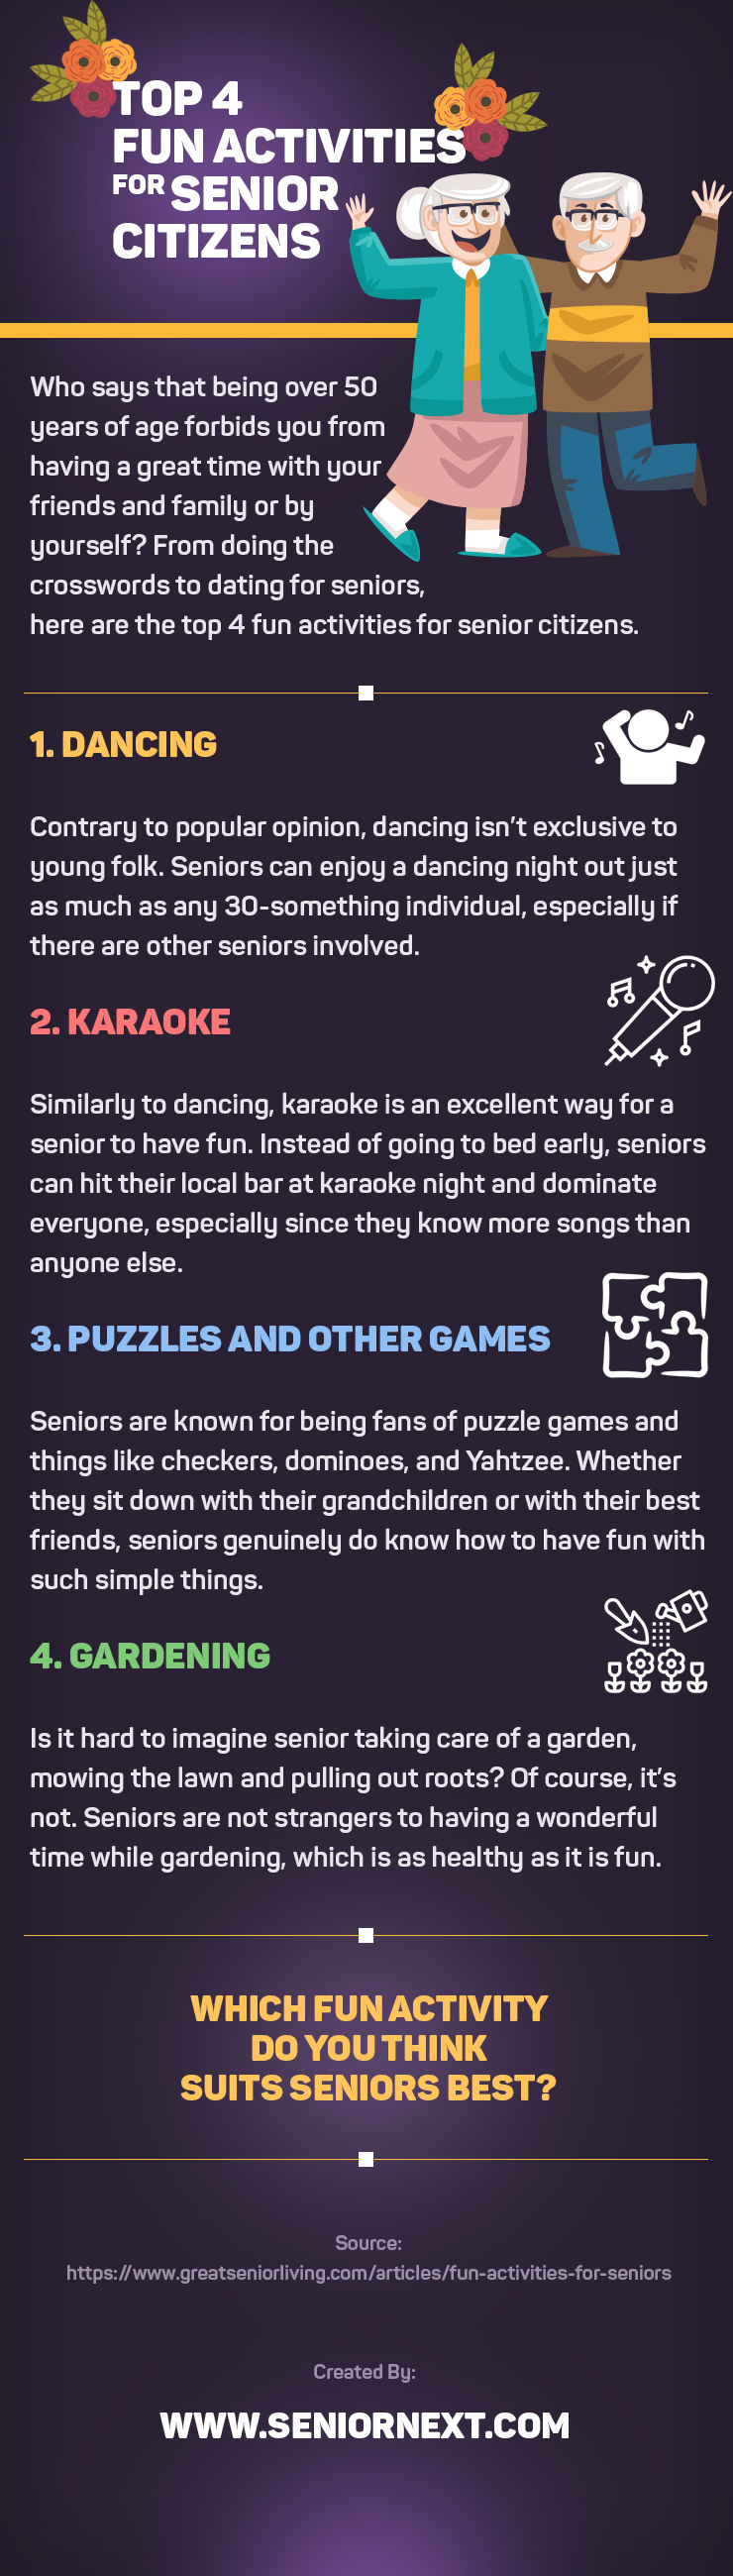 Top 4 Fun Activities for Senior Citizens